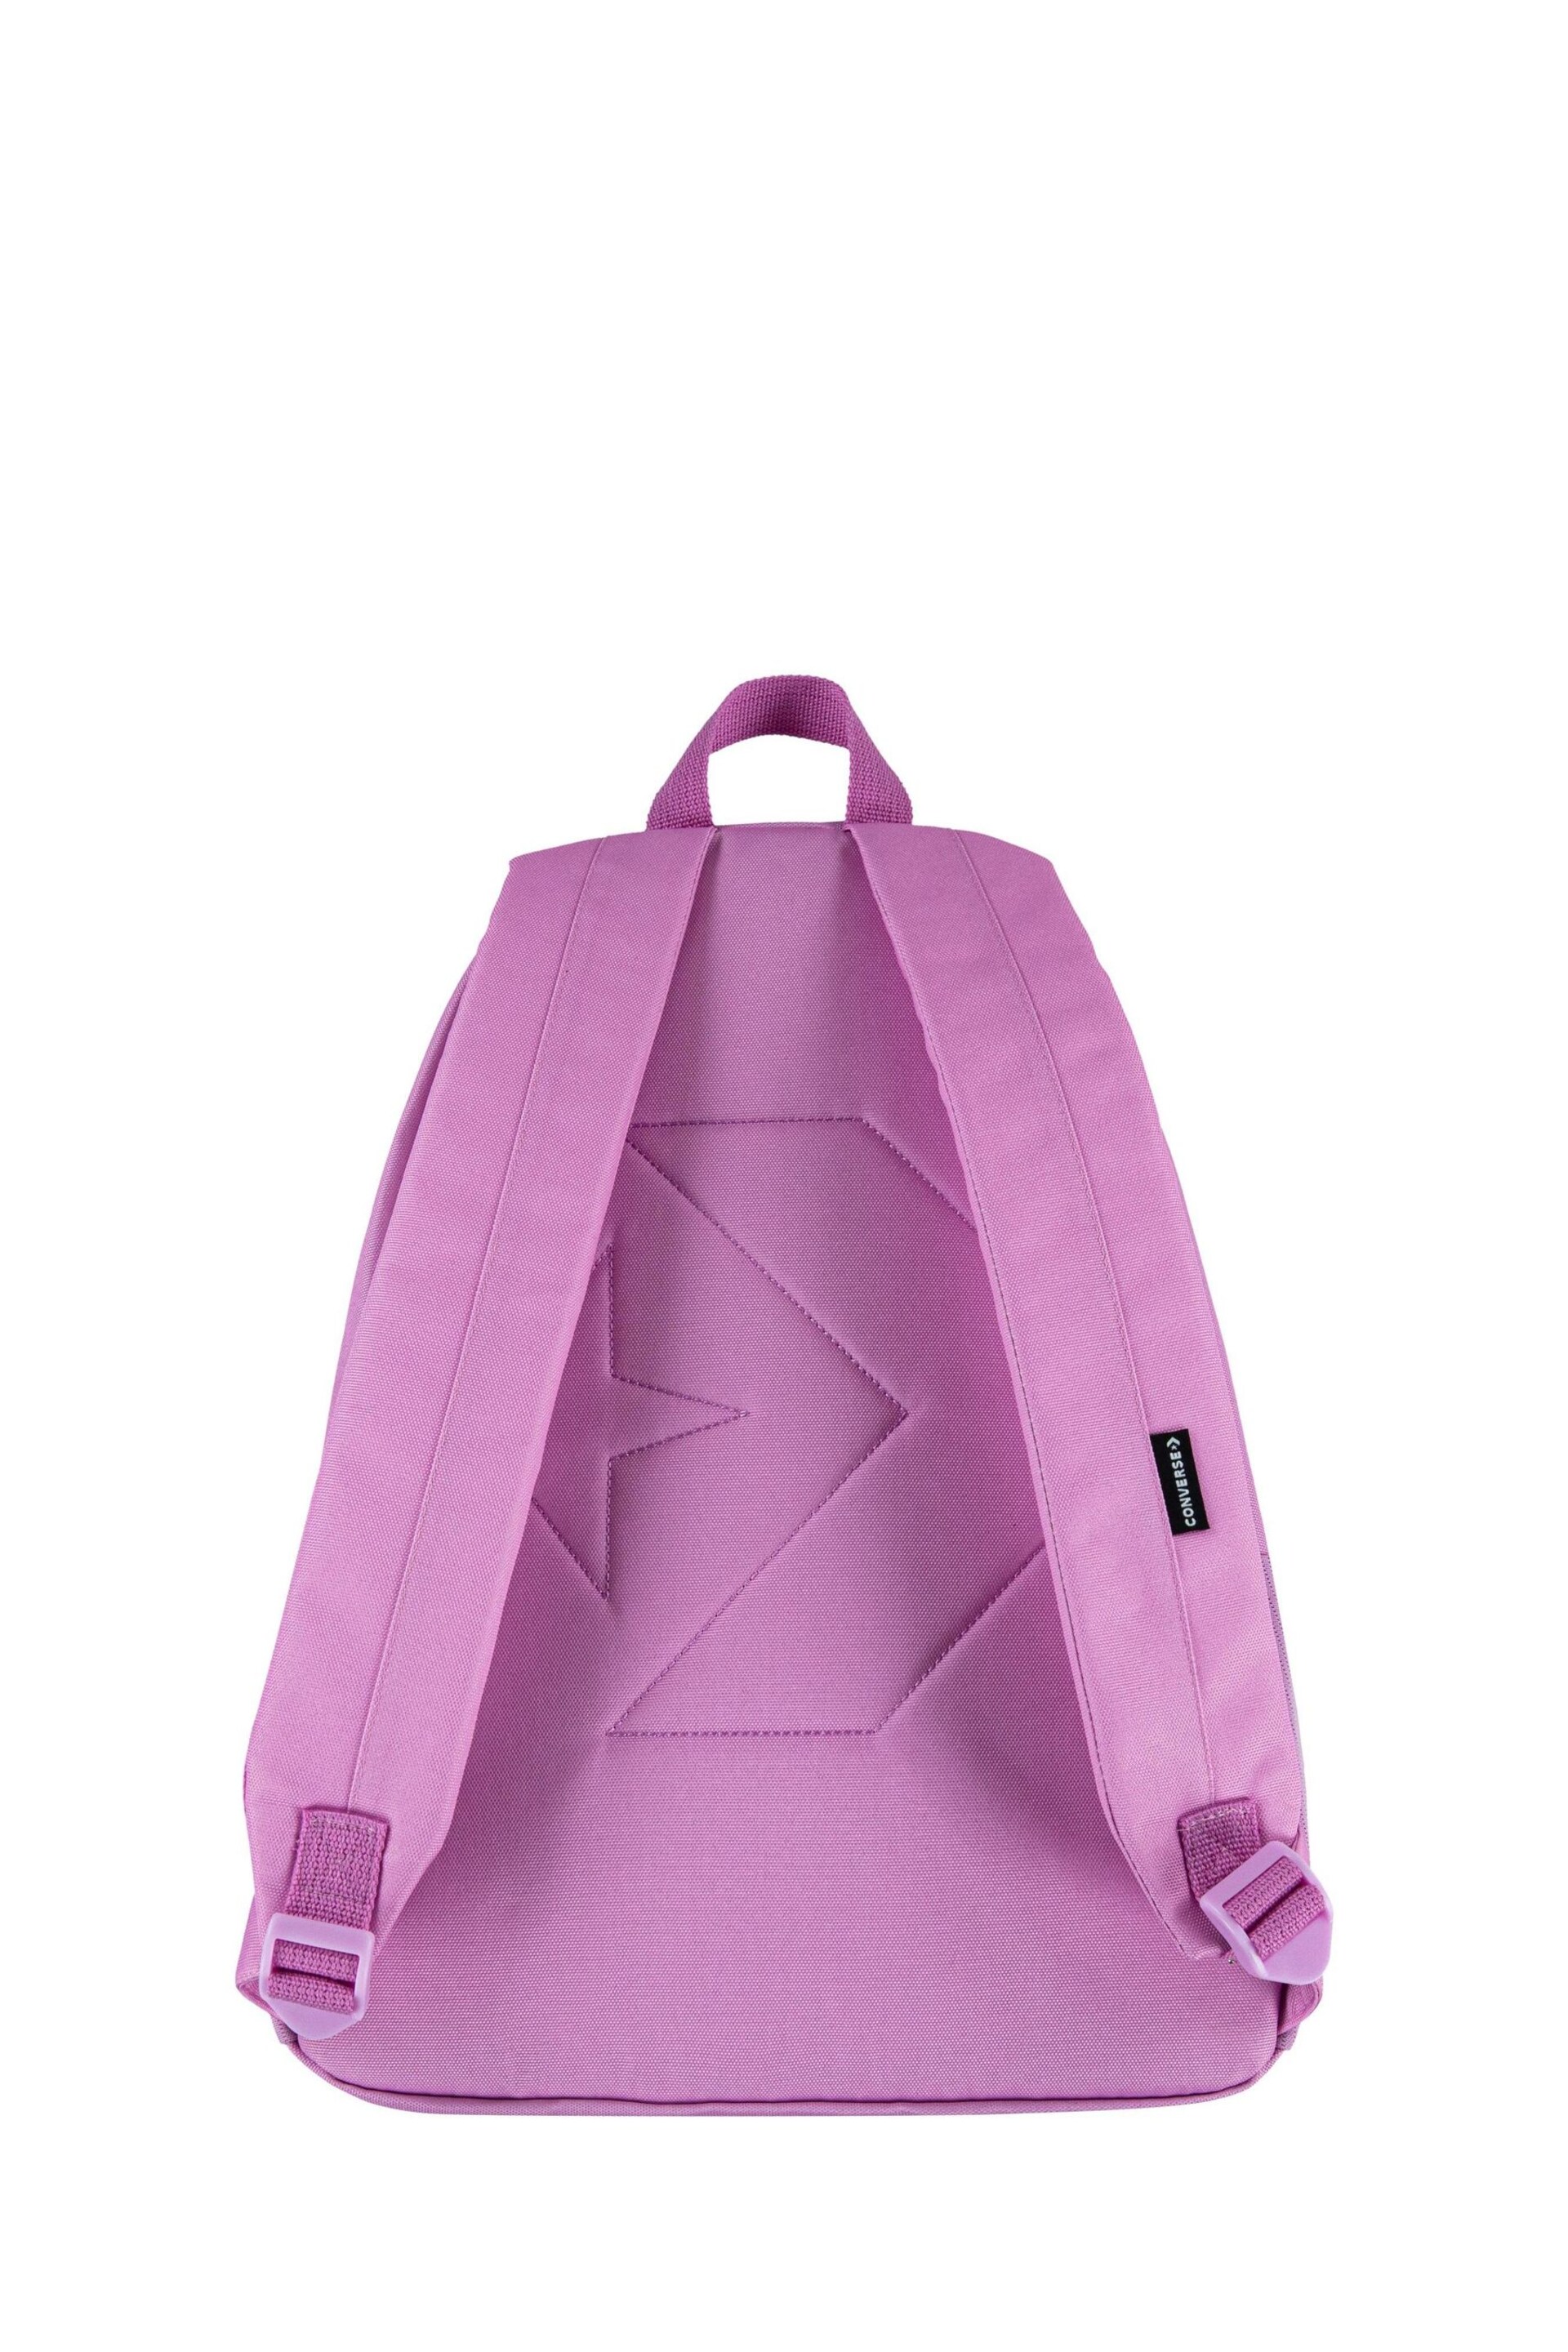 Converse Pink Bag - Image 2 of 7